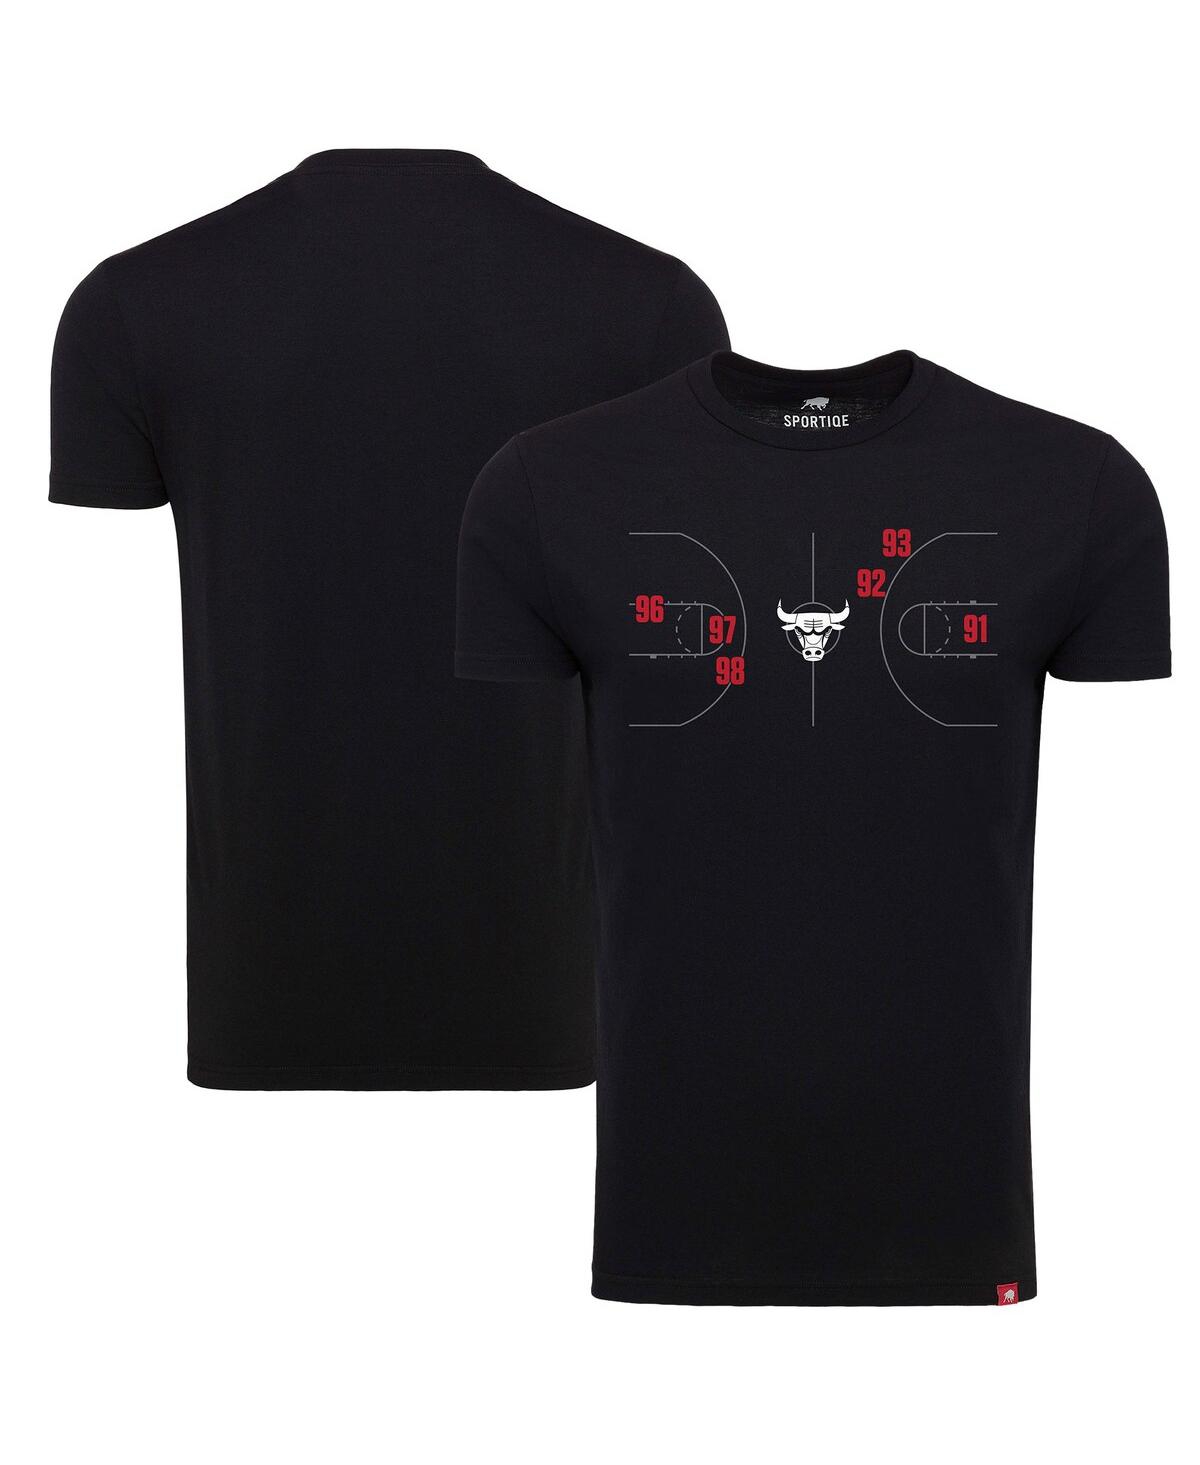 Men's and Women's Sportiqe Black Chicago Bulls 1966 Collection Comfy Tri-Blend T-shirt - Black